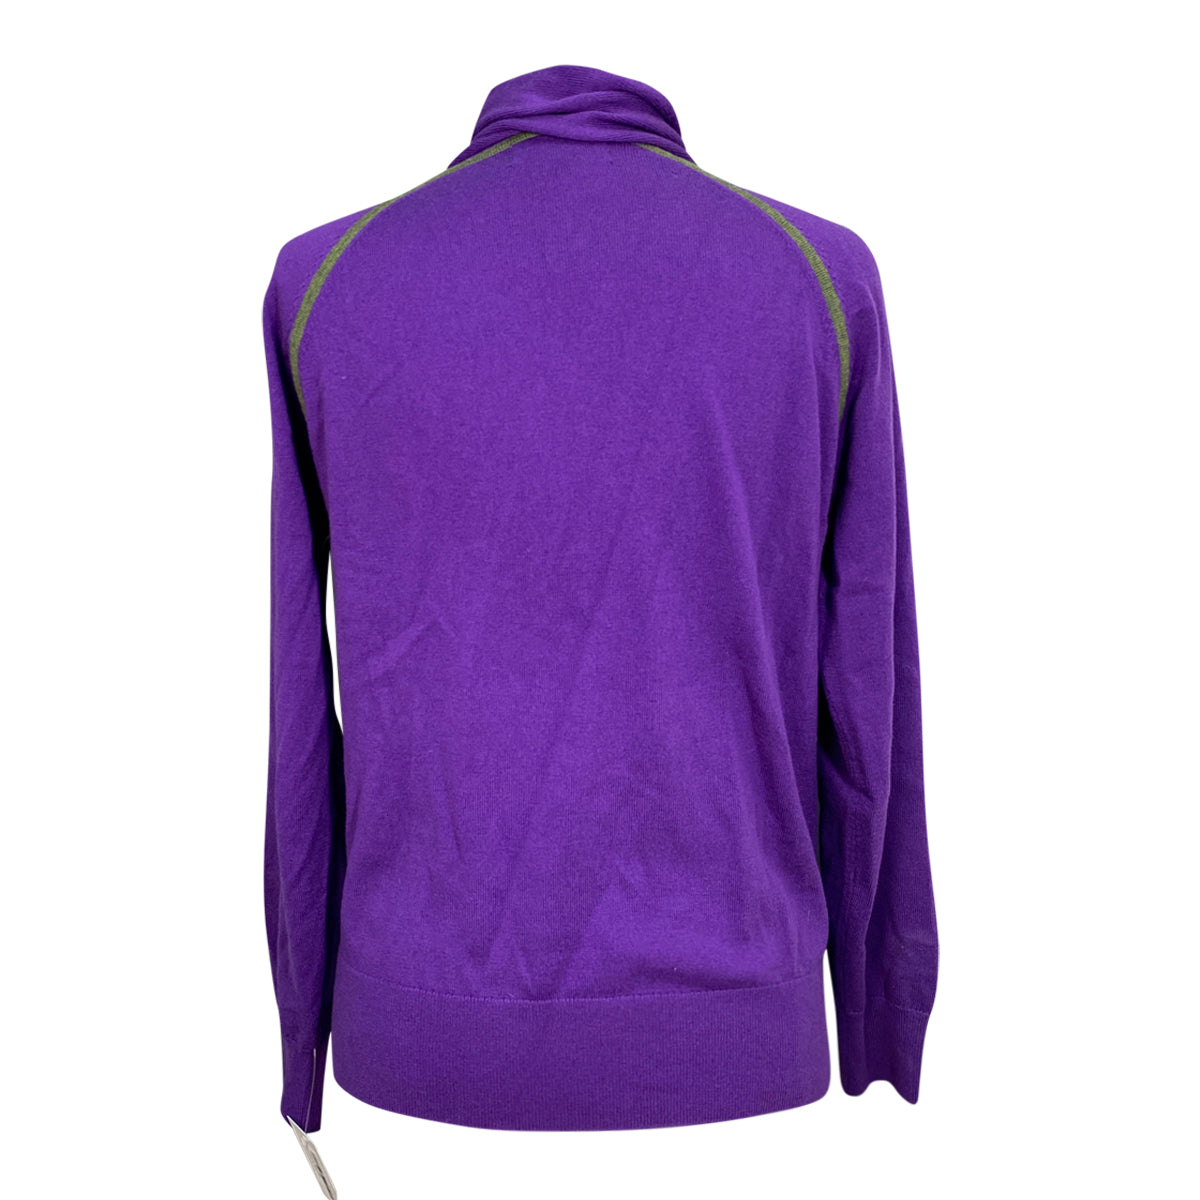 Essex “Charlize” Funnel Neck Sweater in Purple w/Green